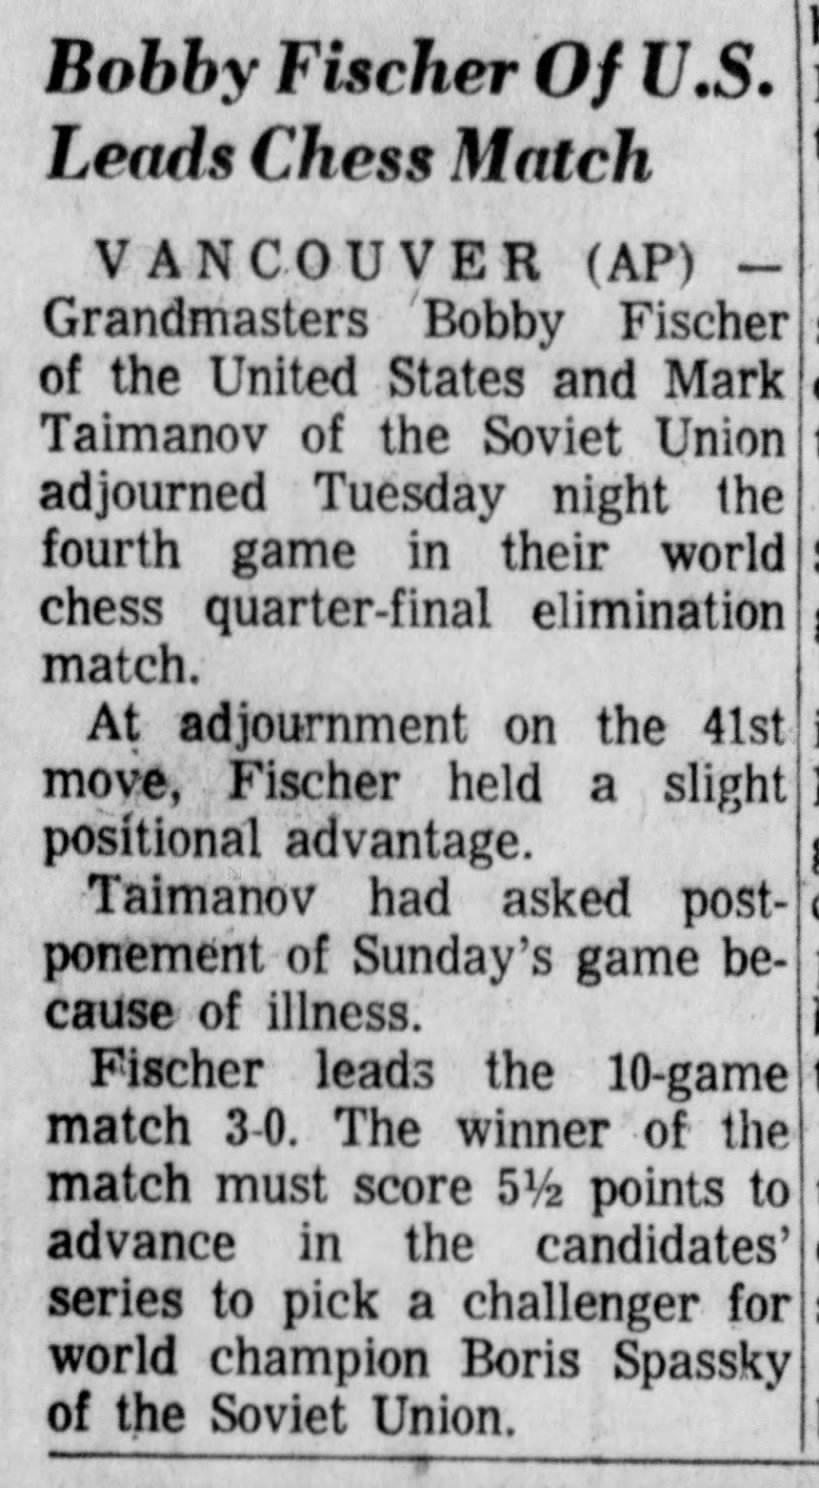 Bobby Fischer of U.S. Leads Chess Match